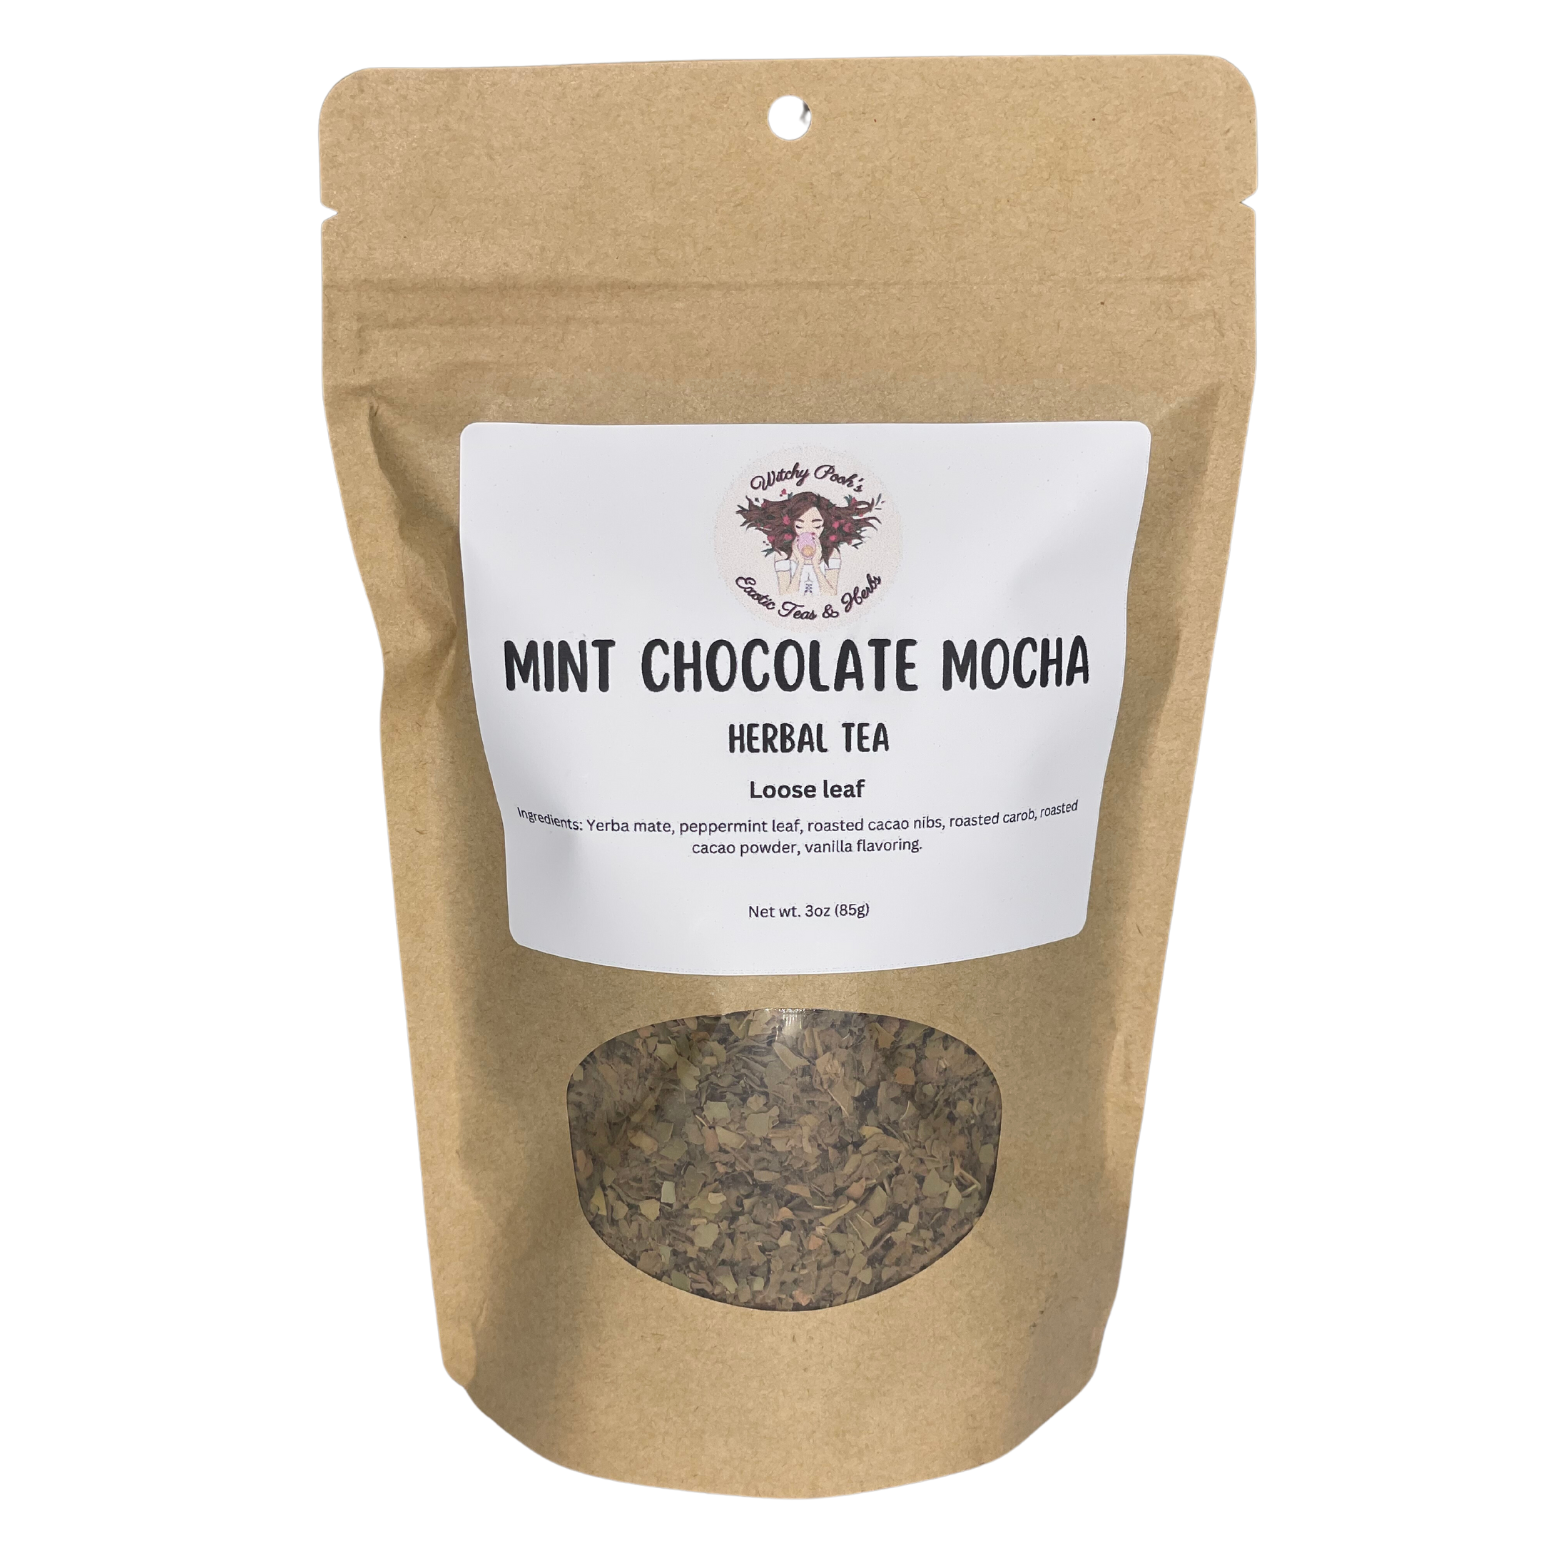 Witchy Pooh's Mint Chocolate Mocha Loose Leaf Yerba Mate Herbal Dessert Tea, Caffeine Free, Energy Drink-6